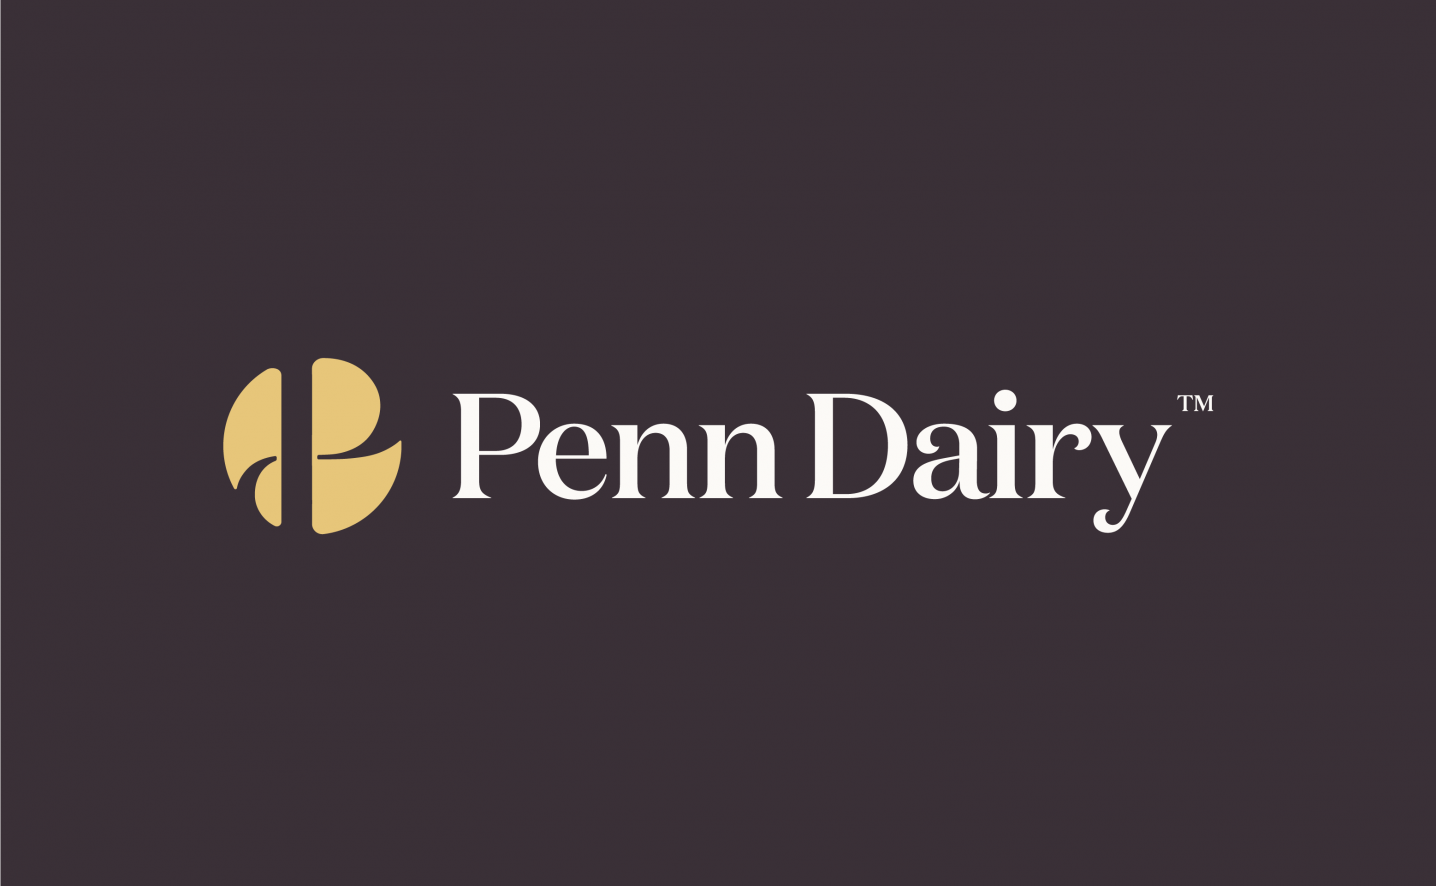 Penn dairy logo design